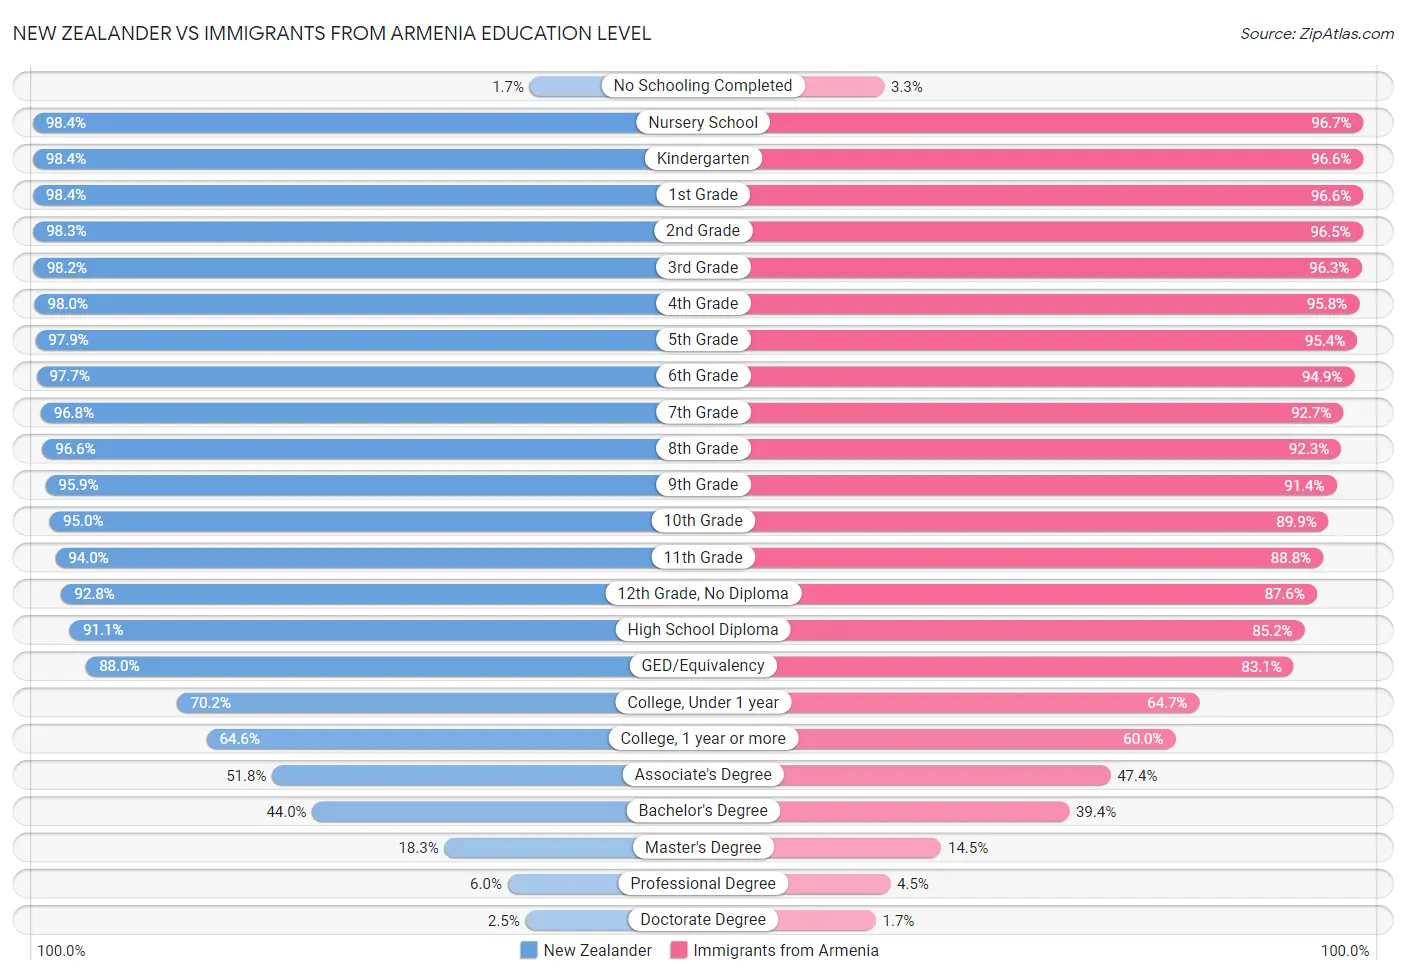 New Zealander vs Immigrants from Armenia Education Level